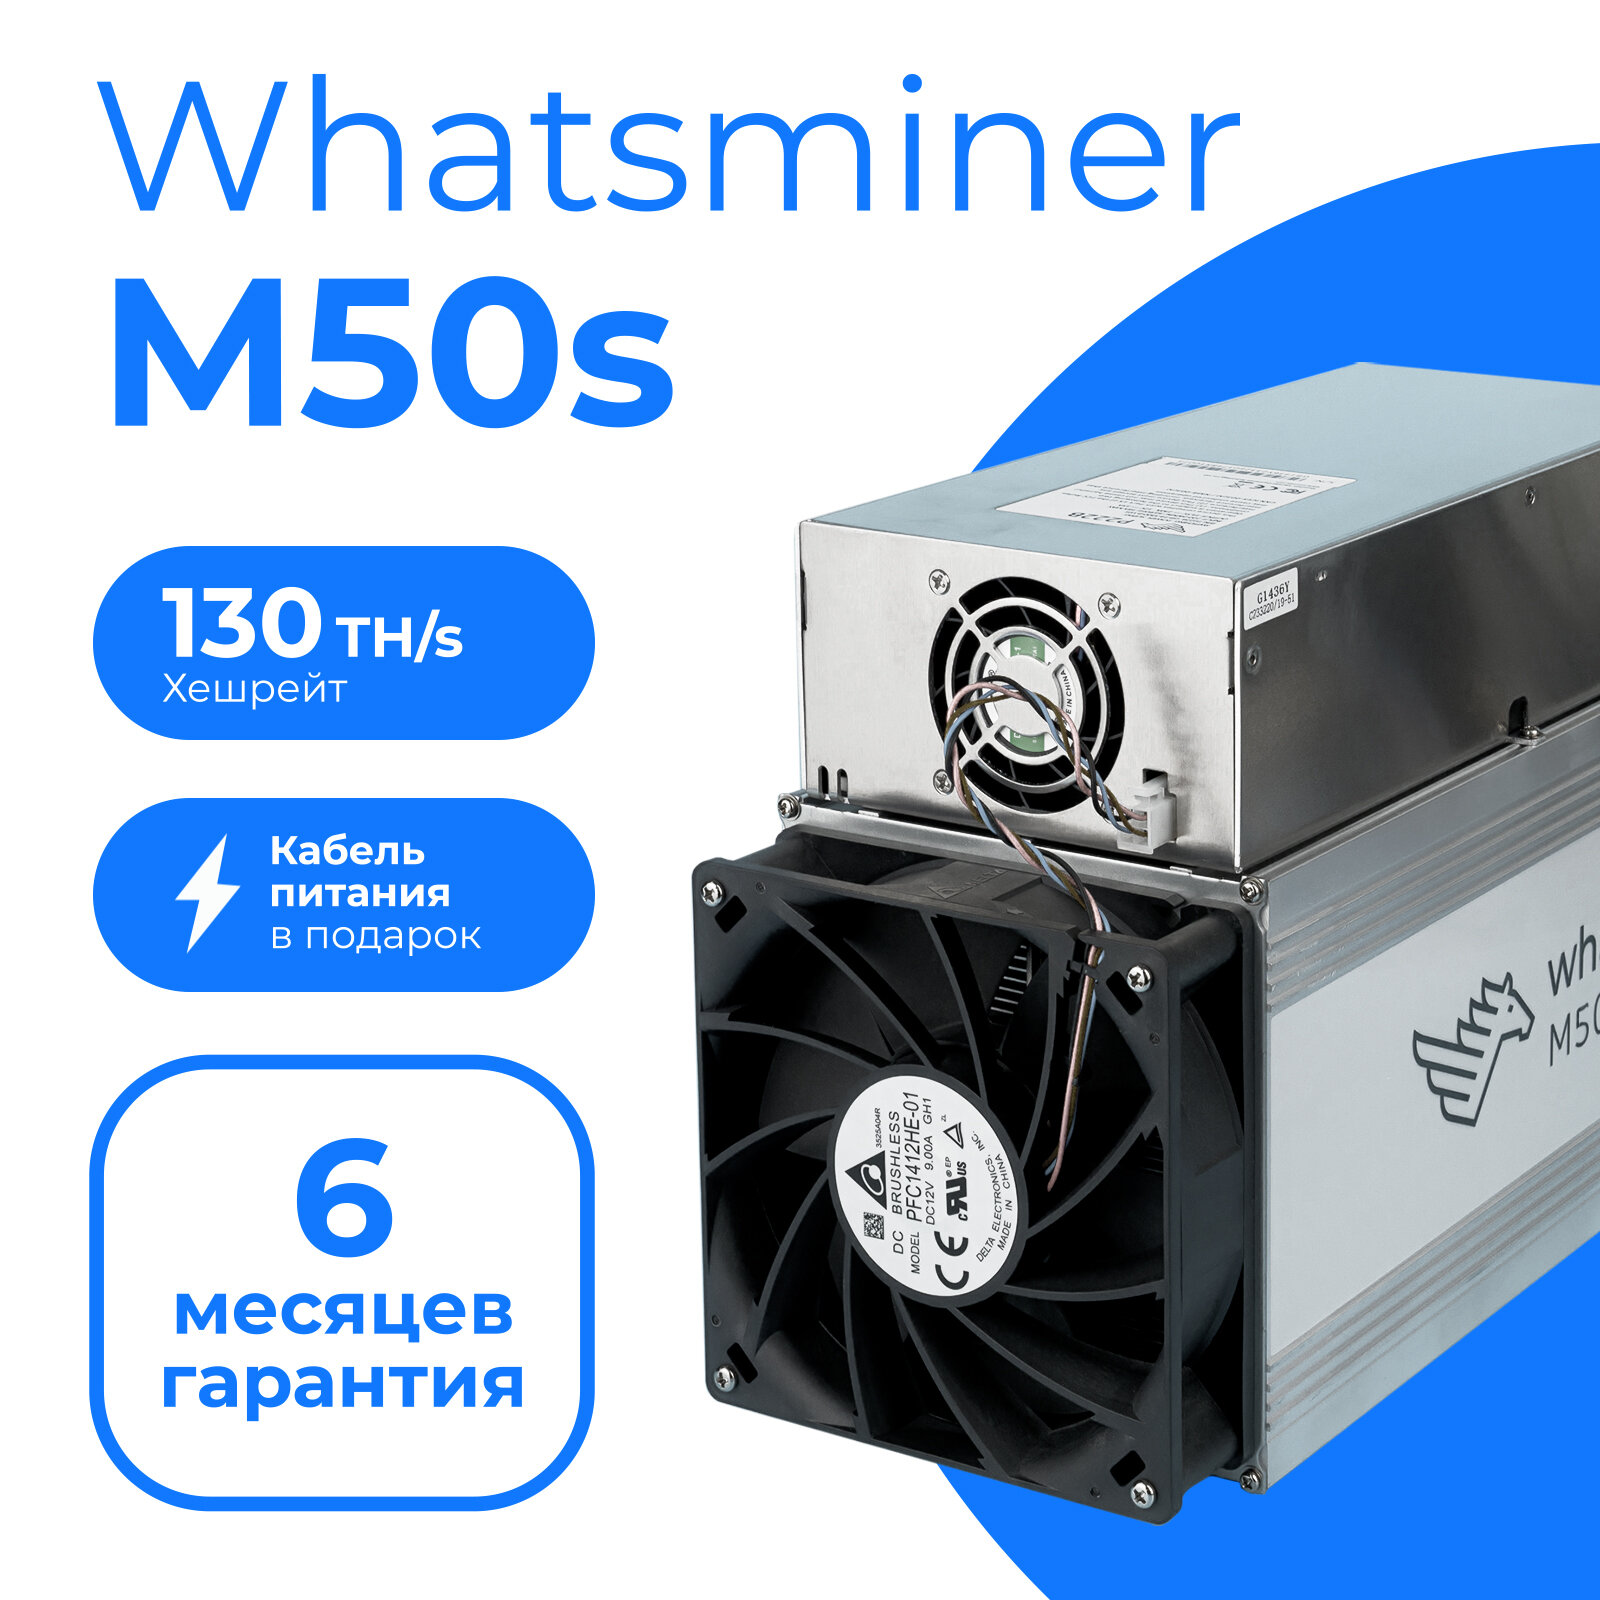 ASIC майнер Whatsminer M50S 130TH/s (26W) с ГТД+ кабель C19 3x1.5 в комплекте